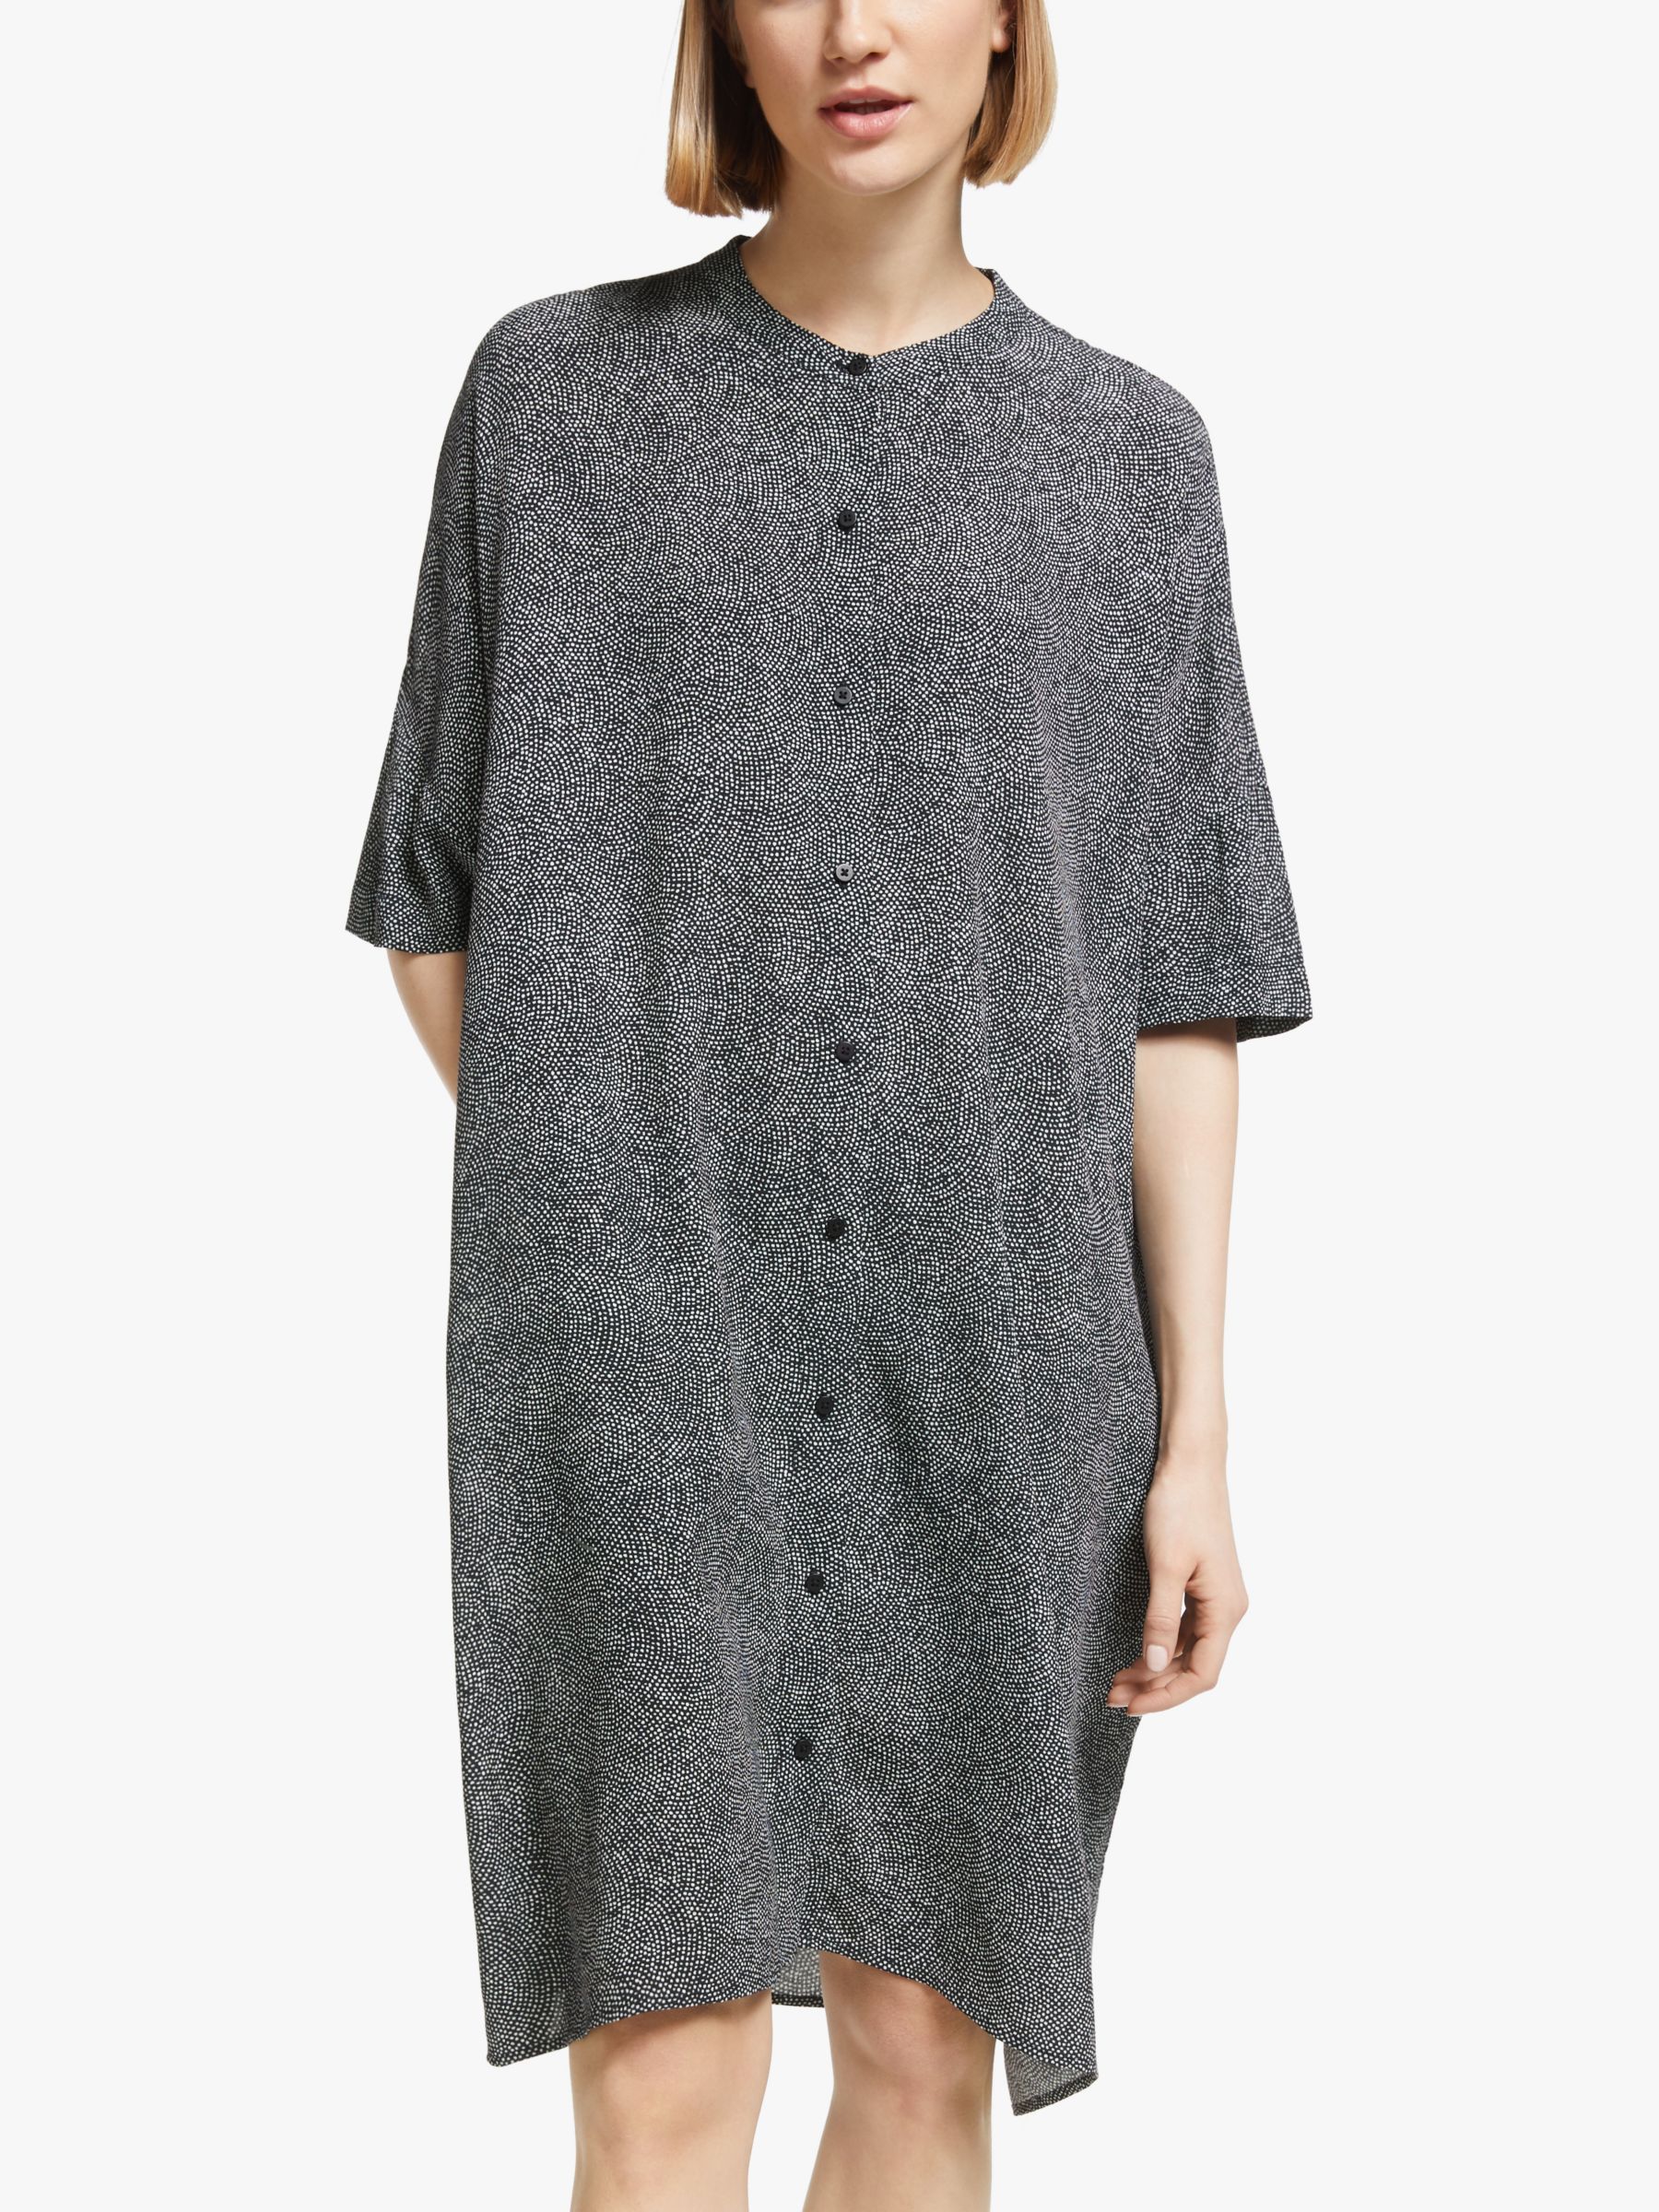 Kin Doshida Print Oversized Shirt Dress, Black